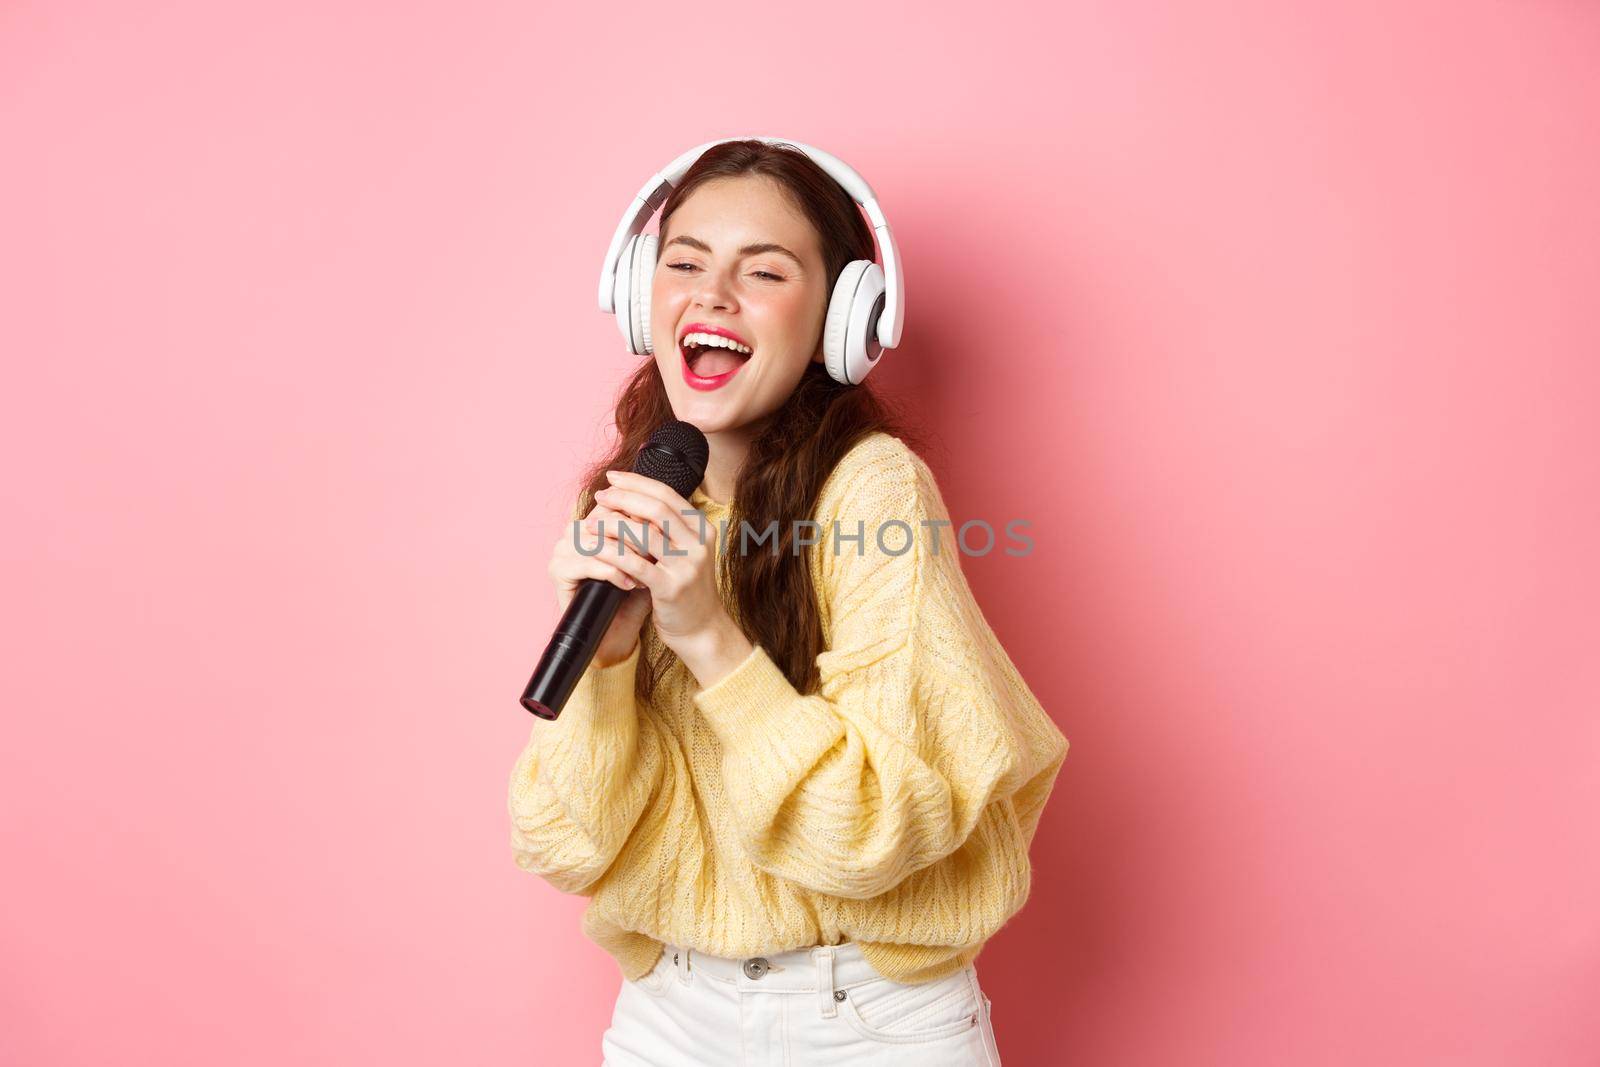 Carefree girl enjoying karaoke night, singing song in microphone, wearing wireless headphones, standing against pink background.